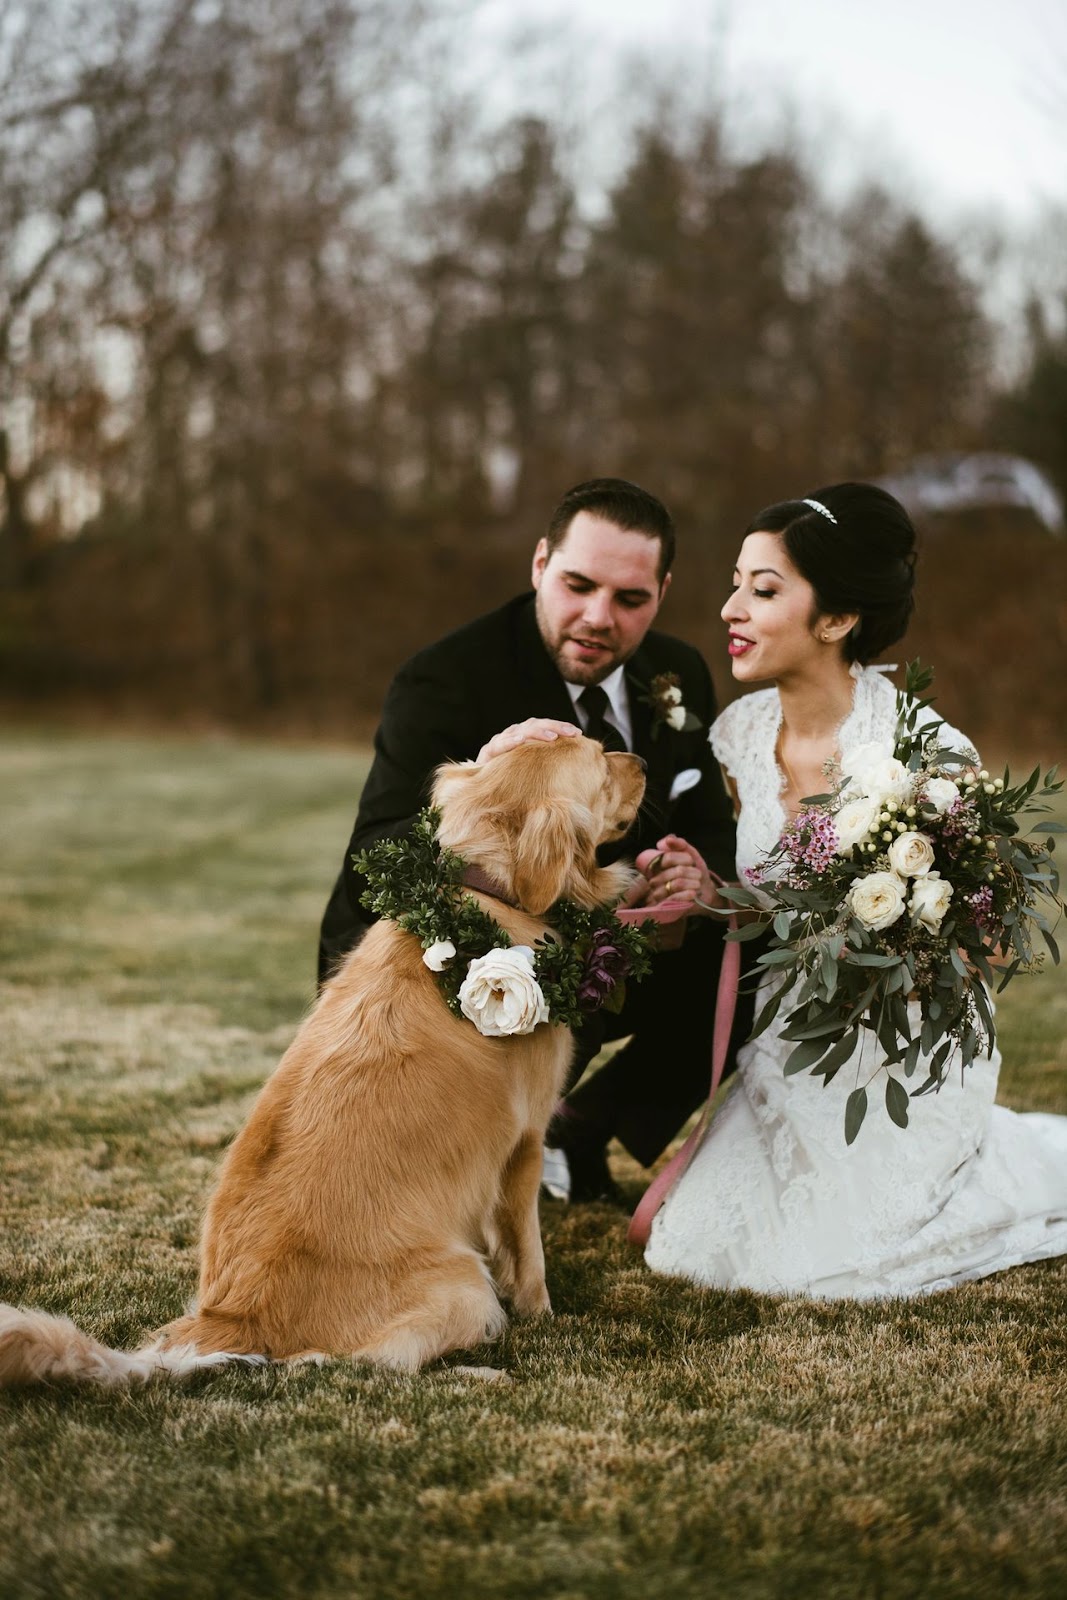 Couple with dog on wedding day.